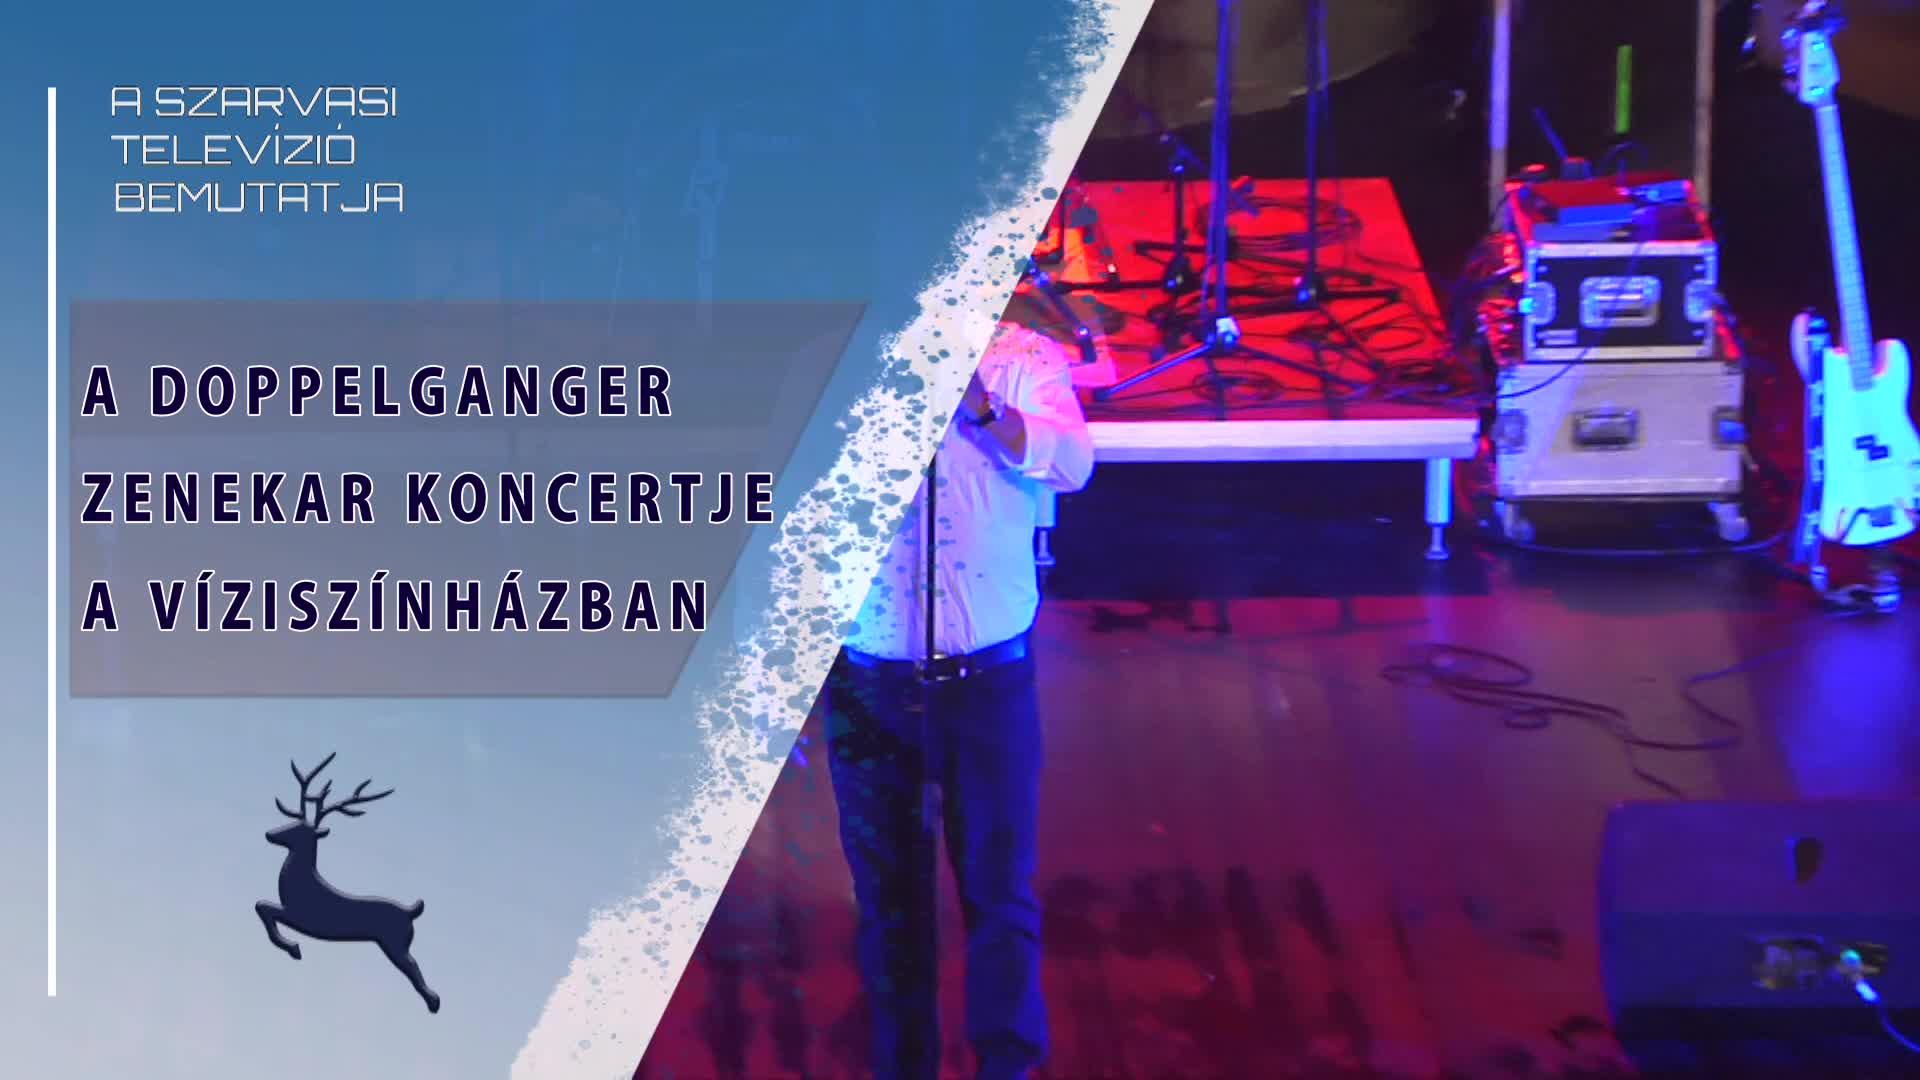 A Doppelgänger zenekar koncertje a Víziszínházban